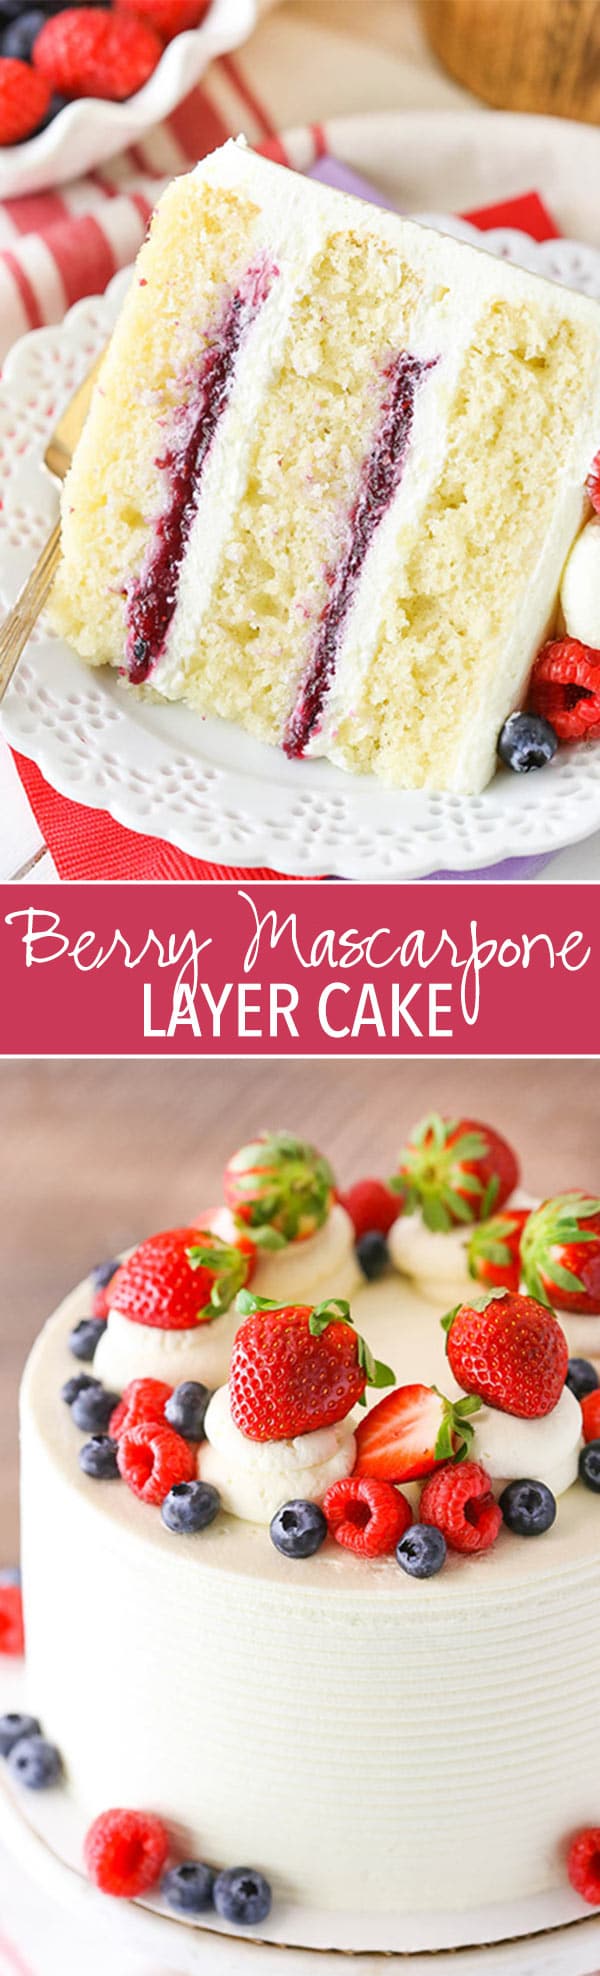 Berry Mascarpone Layer Cake - layers of moist vanilla cake, fresh berry filling and whipped mascarpone frosting!